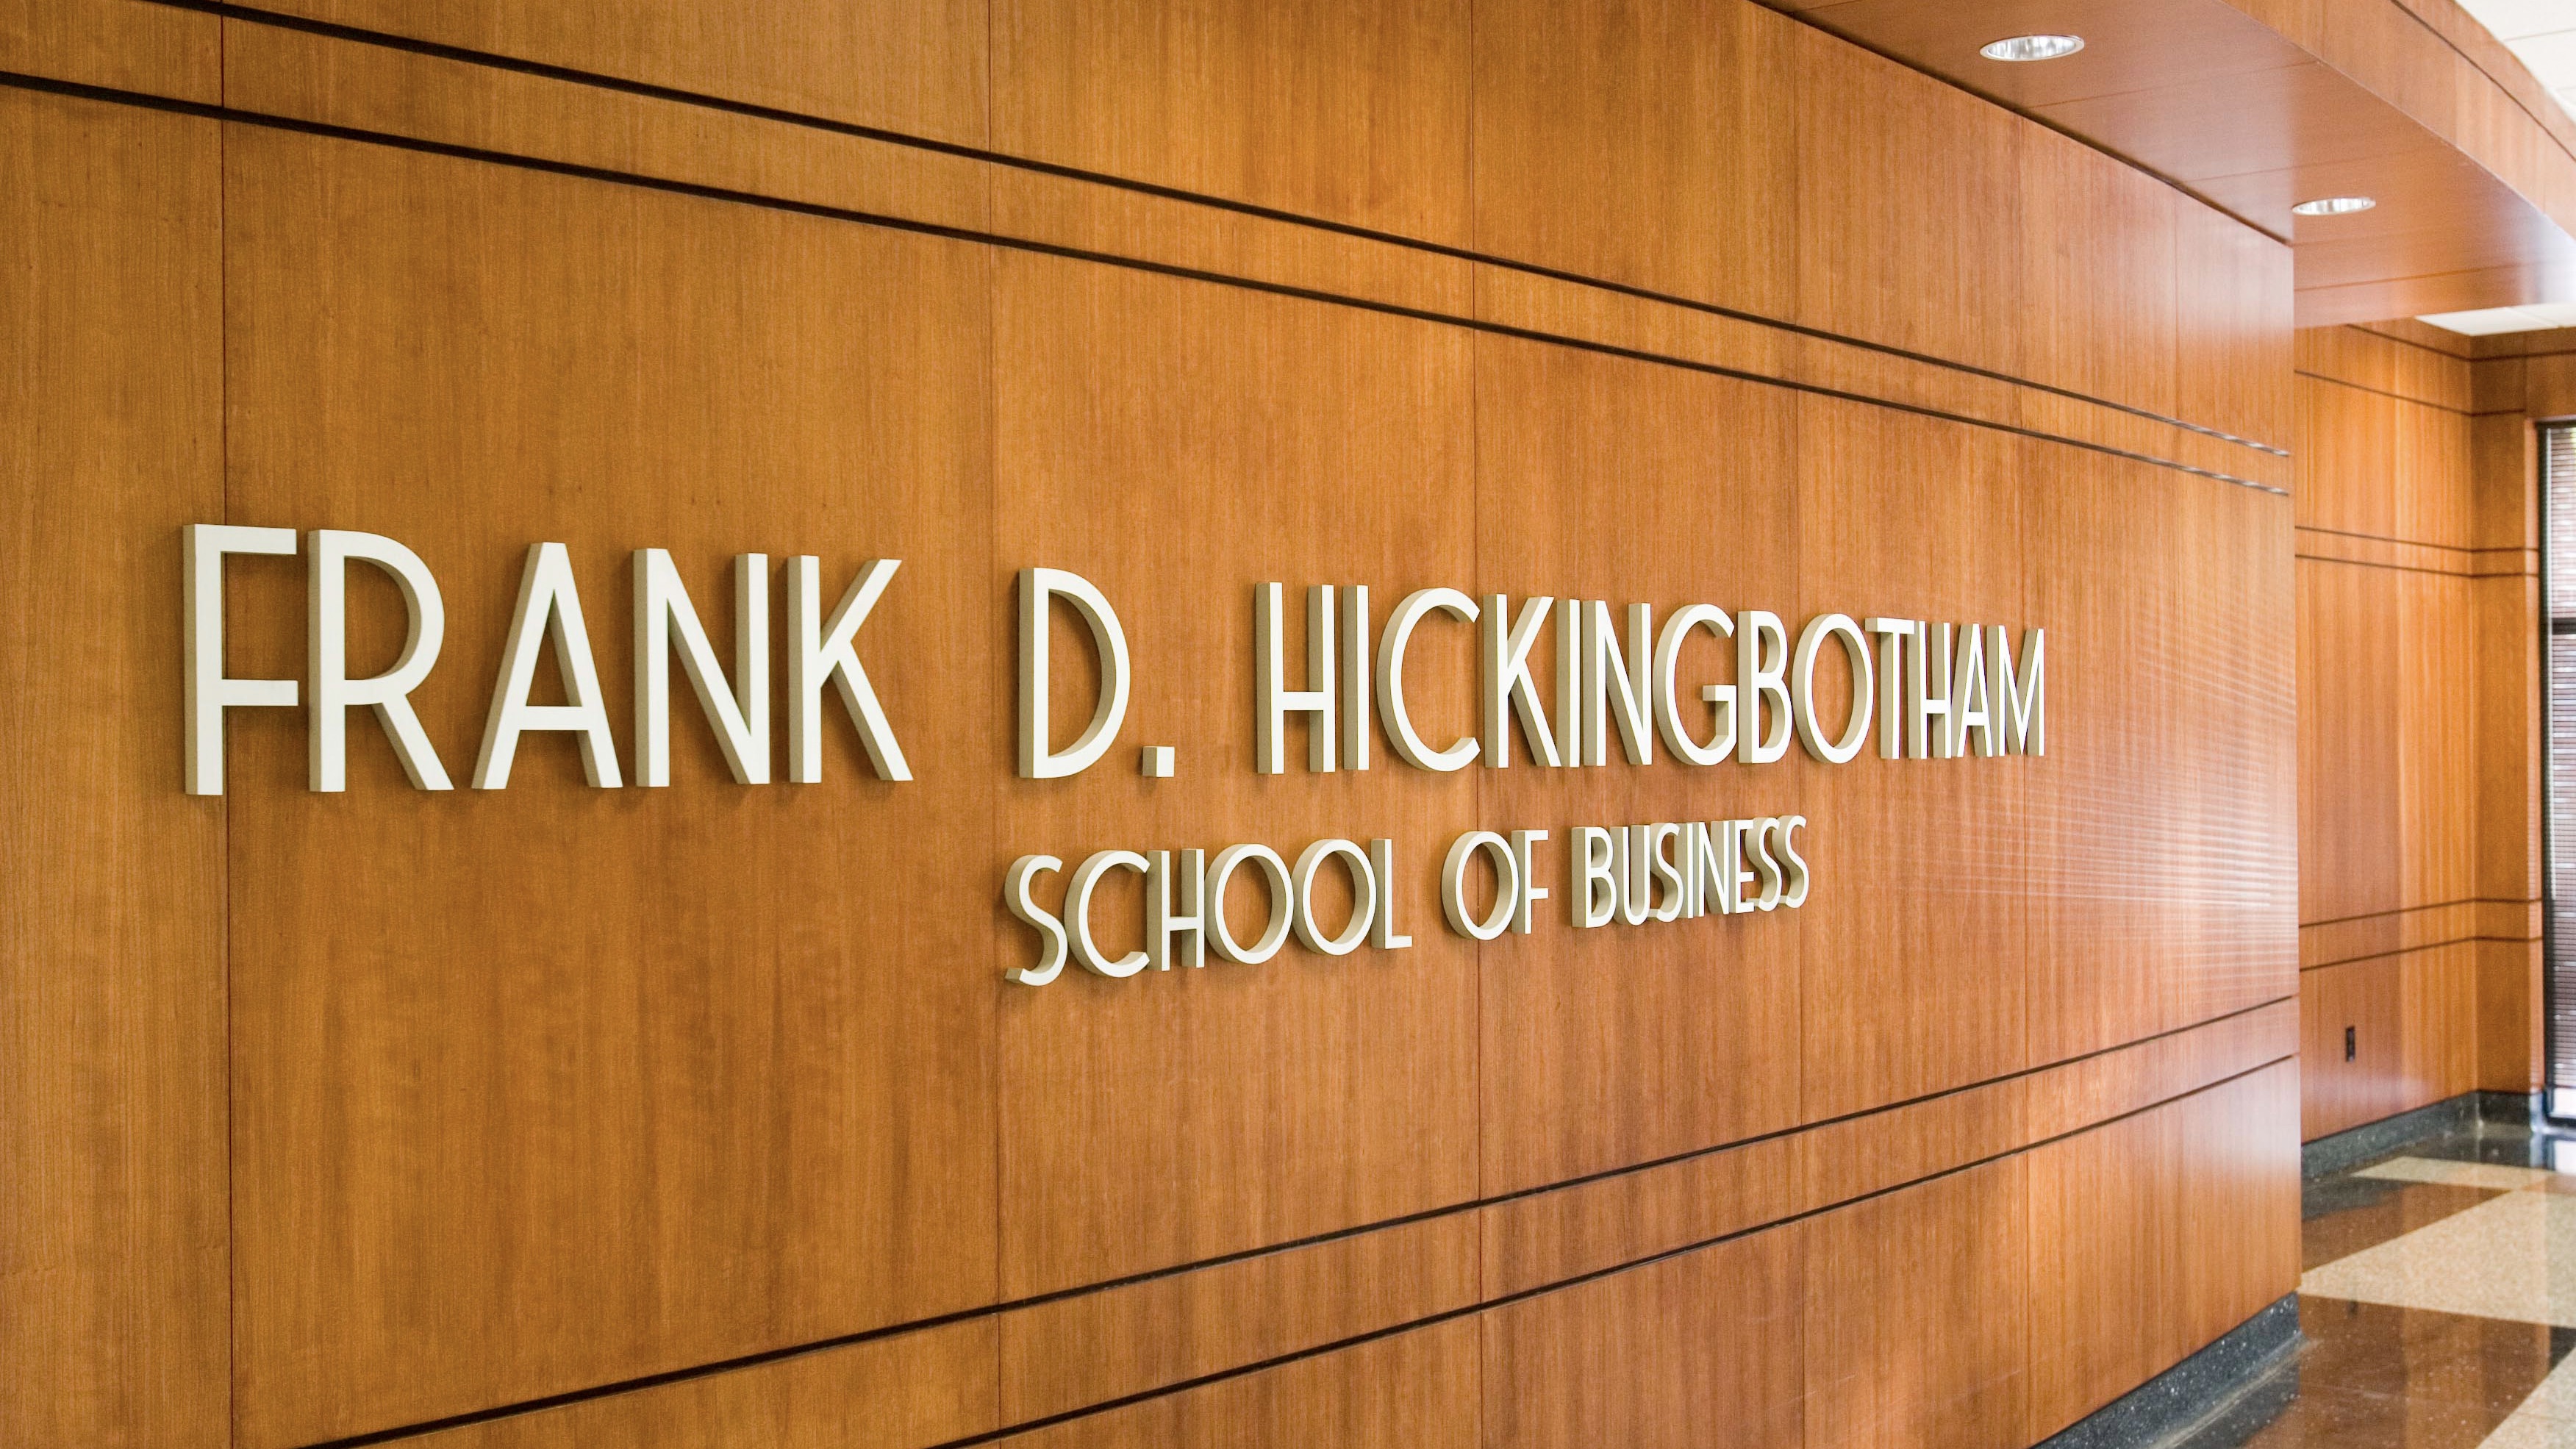 Hickingbotham School of Business at Ouachita Baptist University